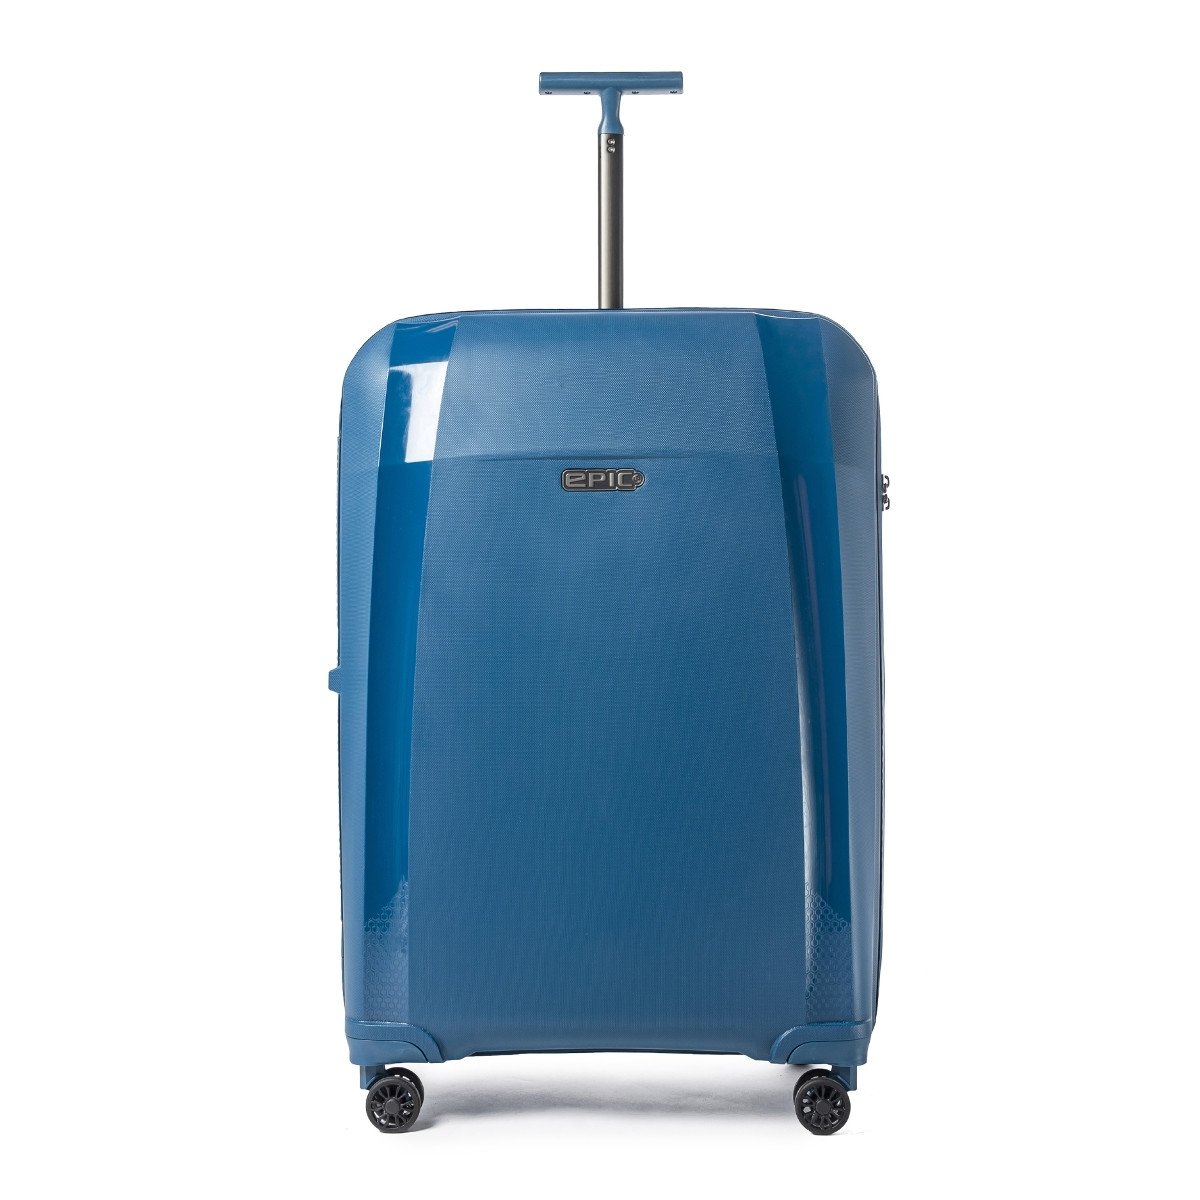 Køb Epic Phantom lagoon blue kuffert